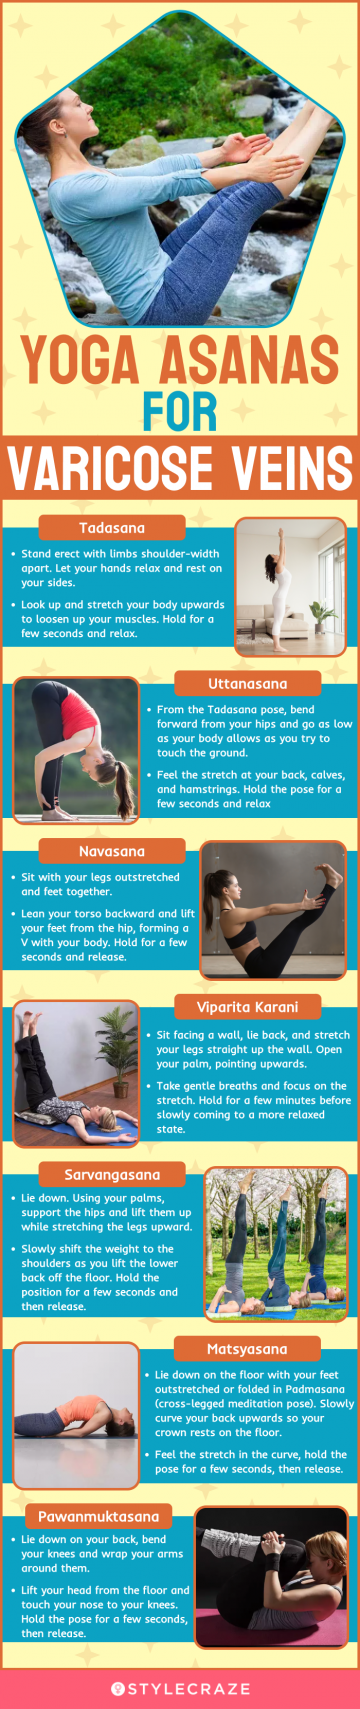 yoga asanas for varicose veins (infographic)